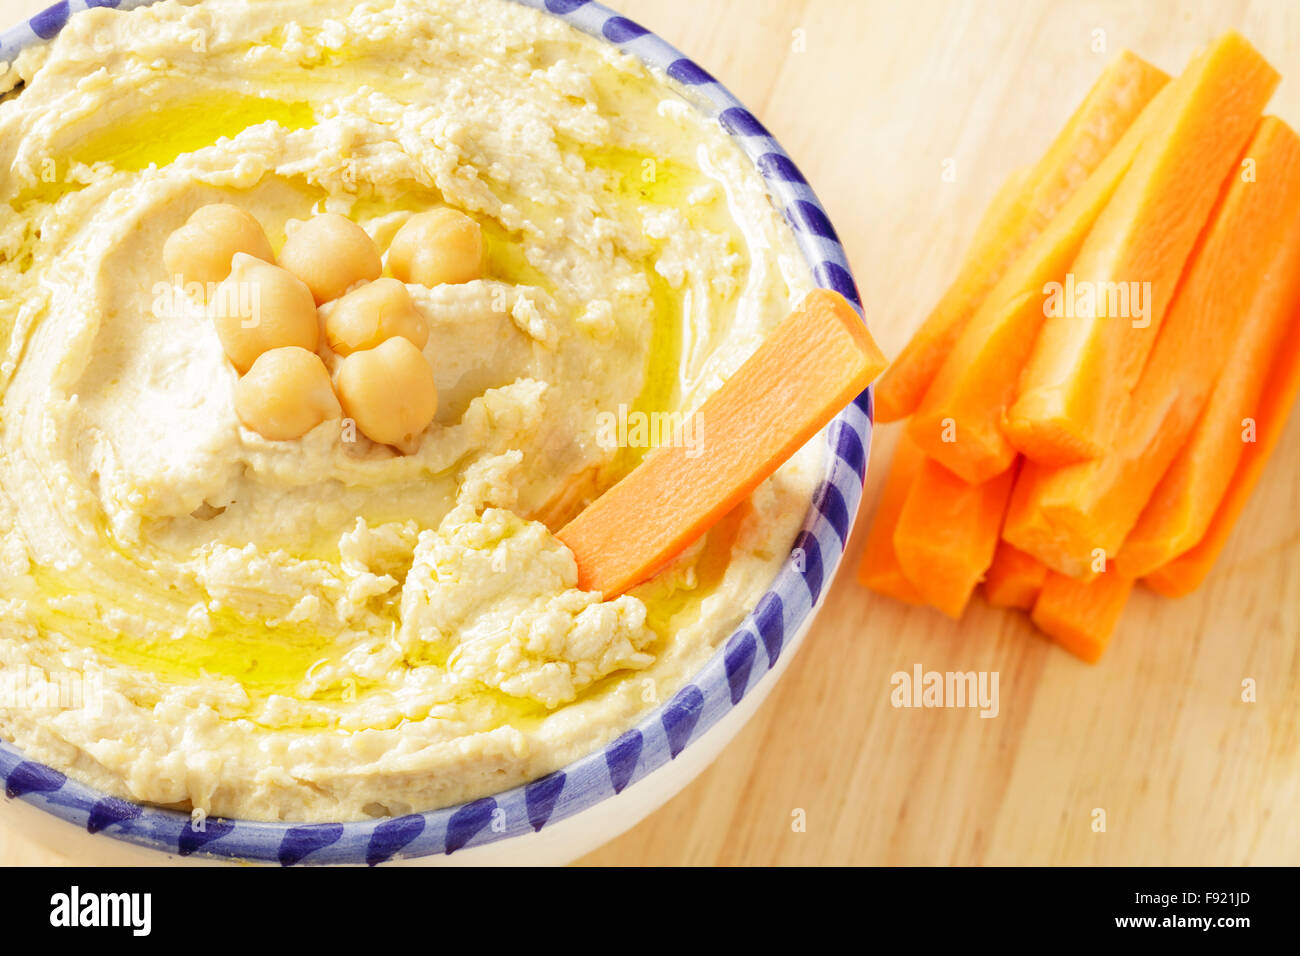 Hummus and carrot sticks Stock Photo